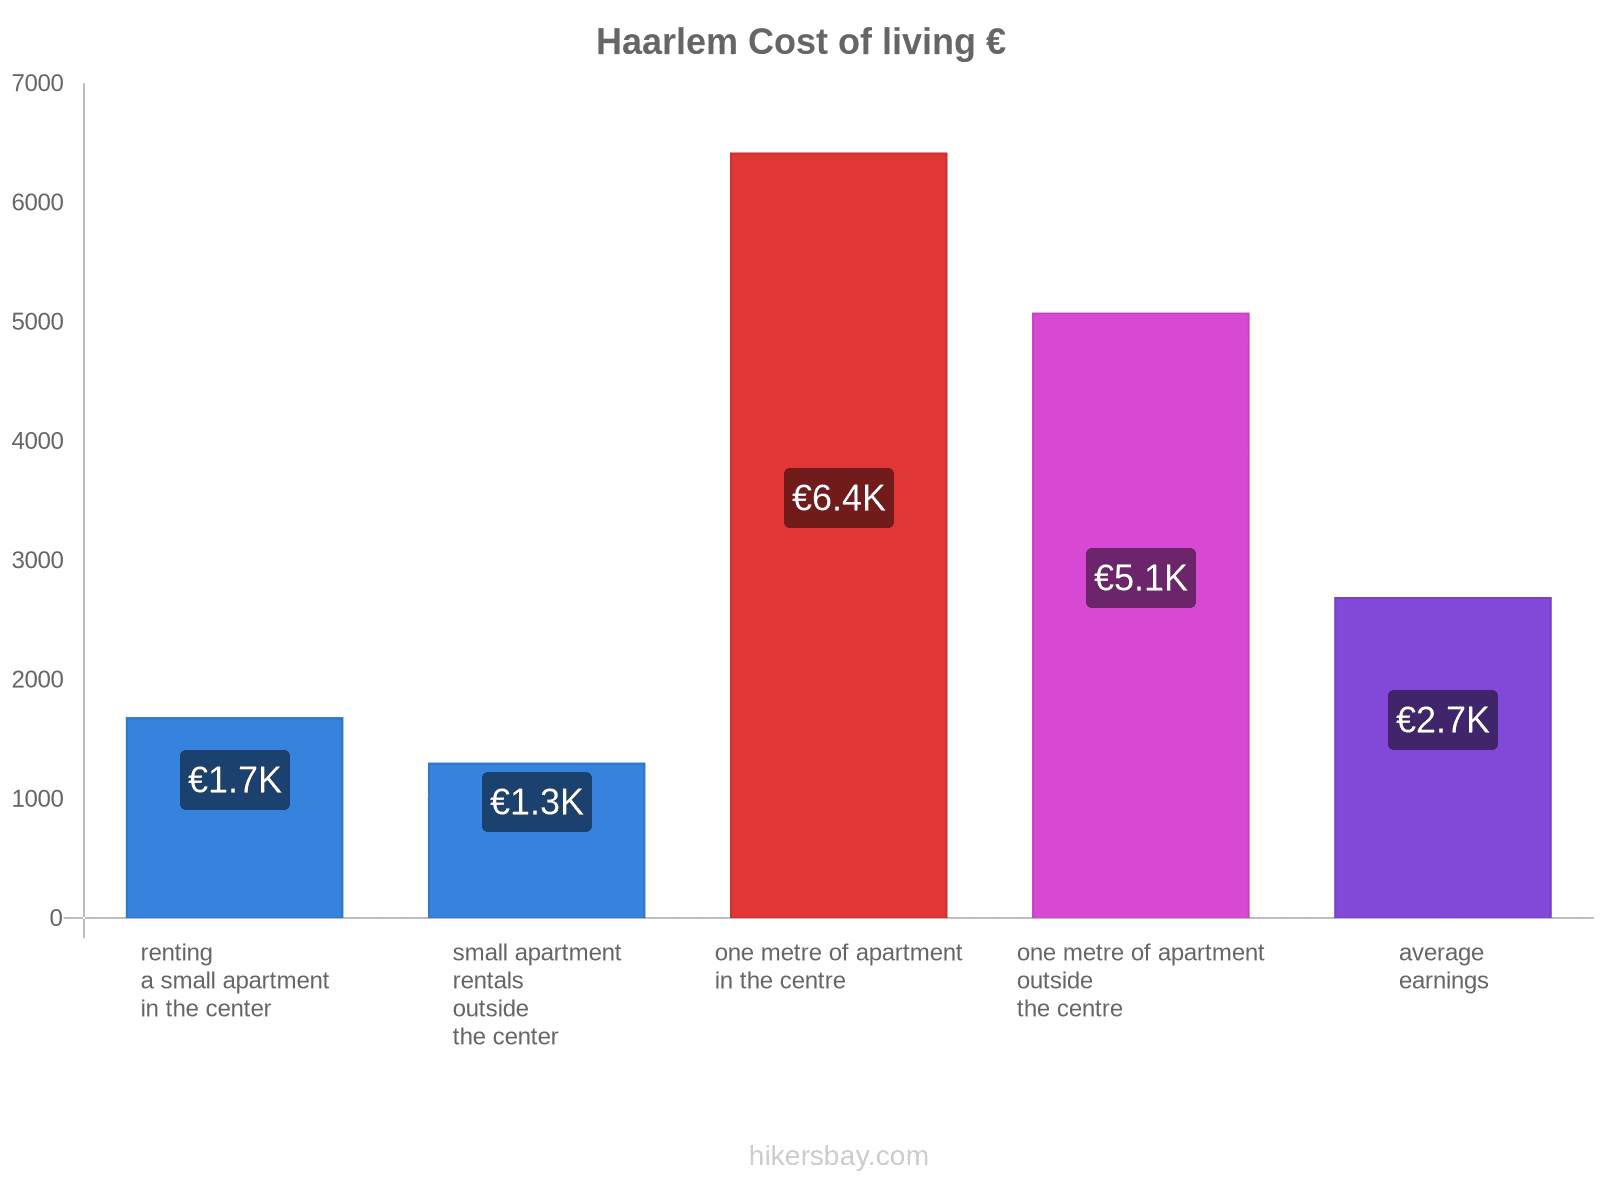 Haarlem cost of living hikersbay.com